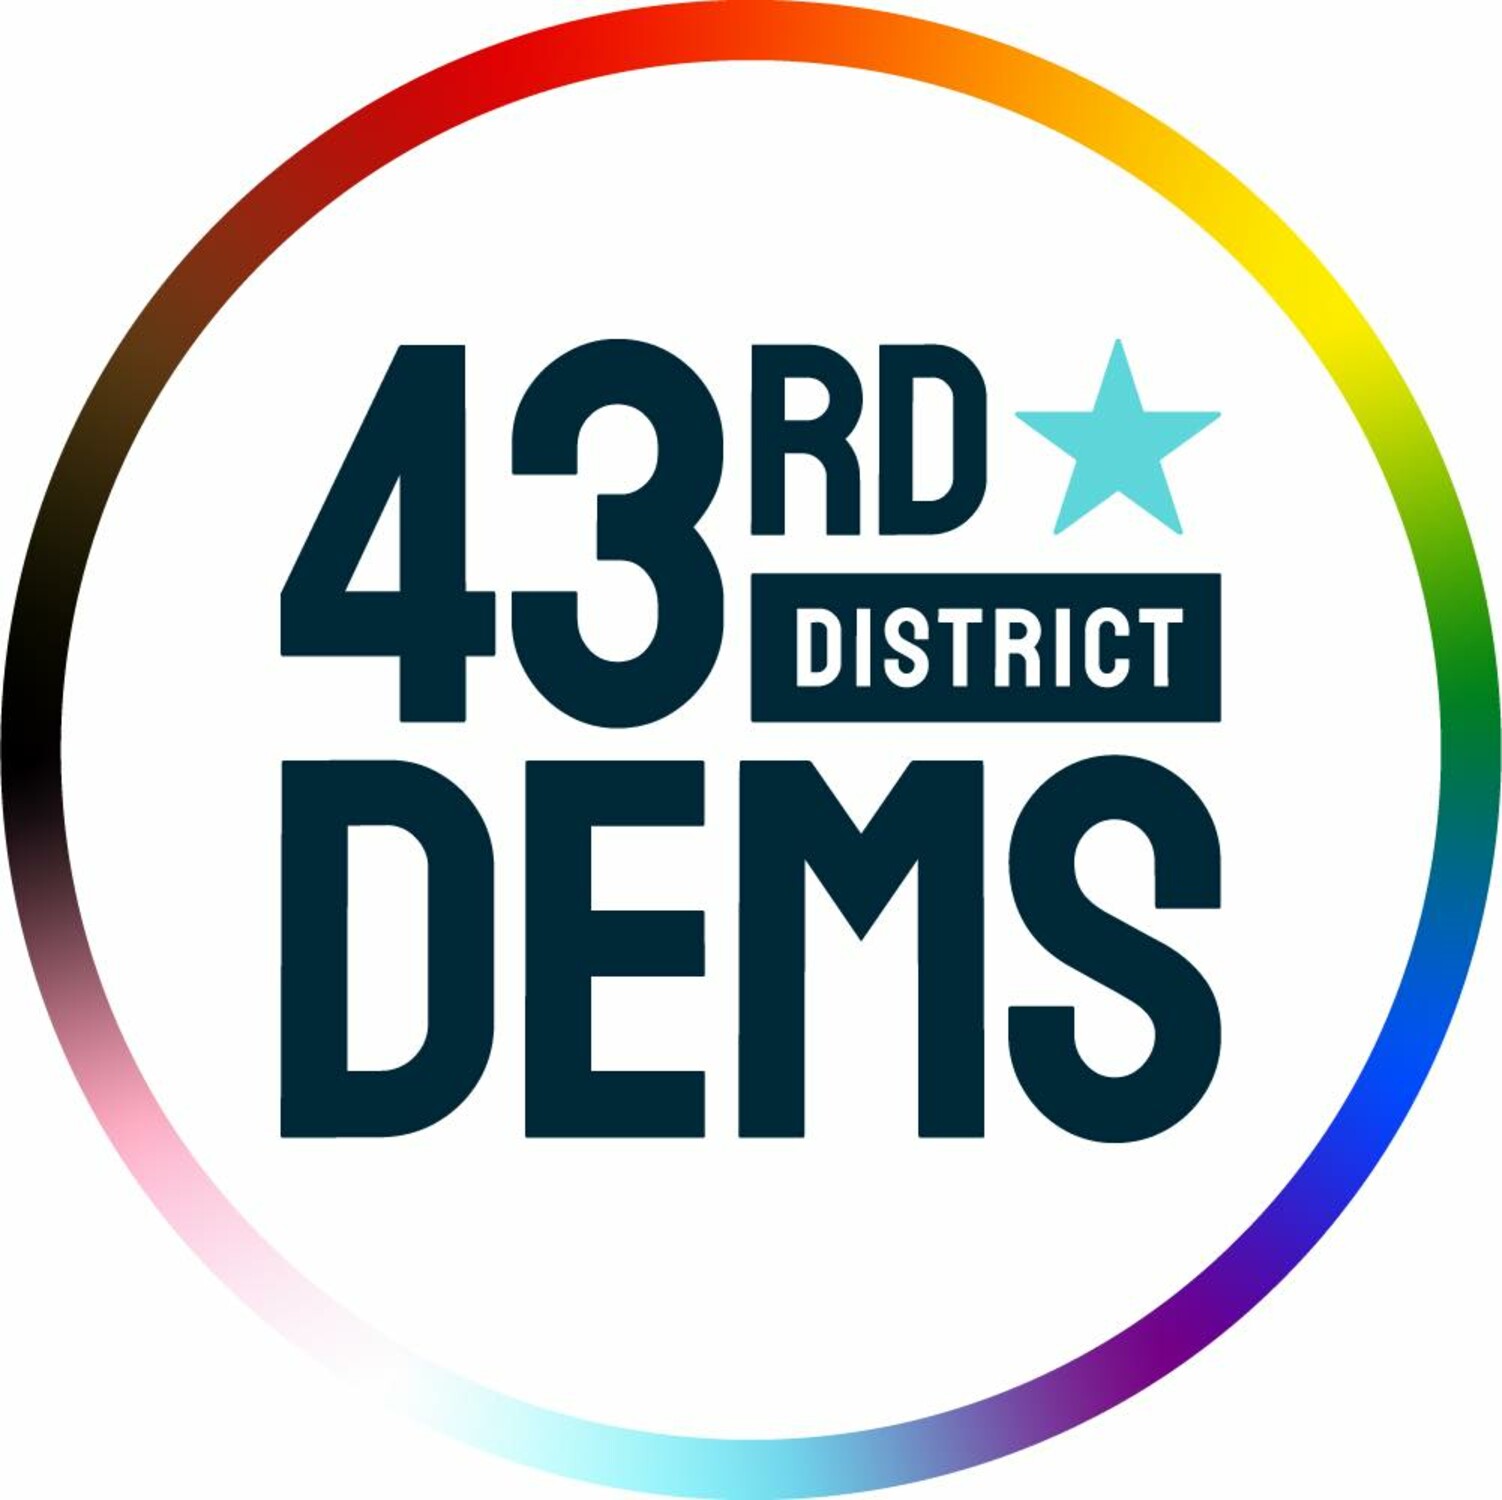 43rd district dems logo